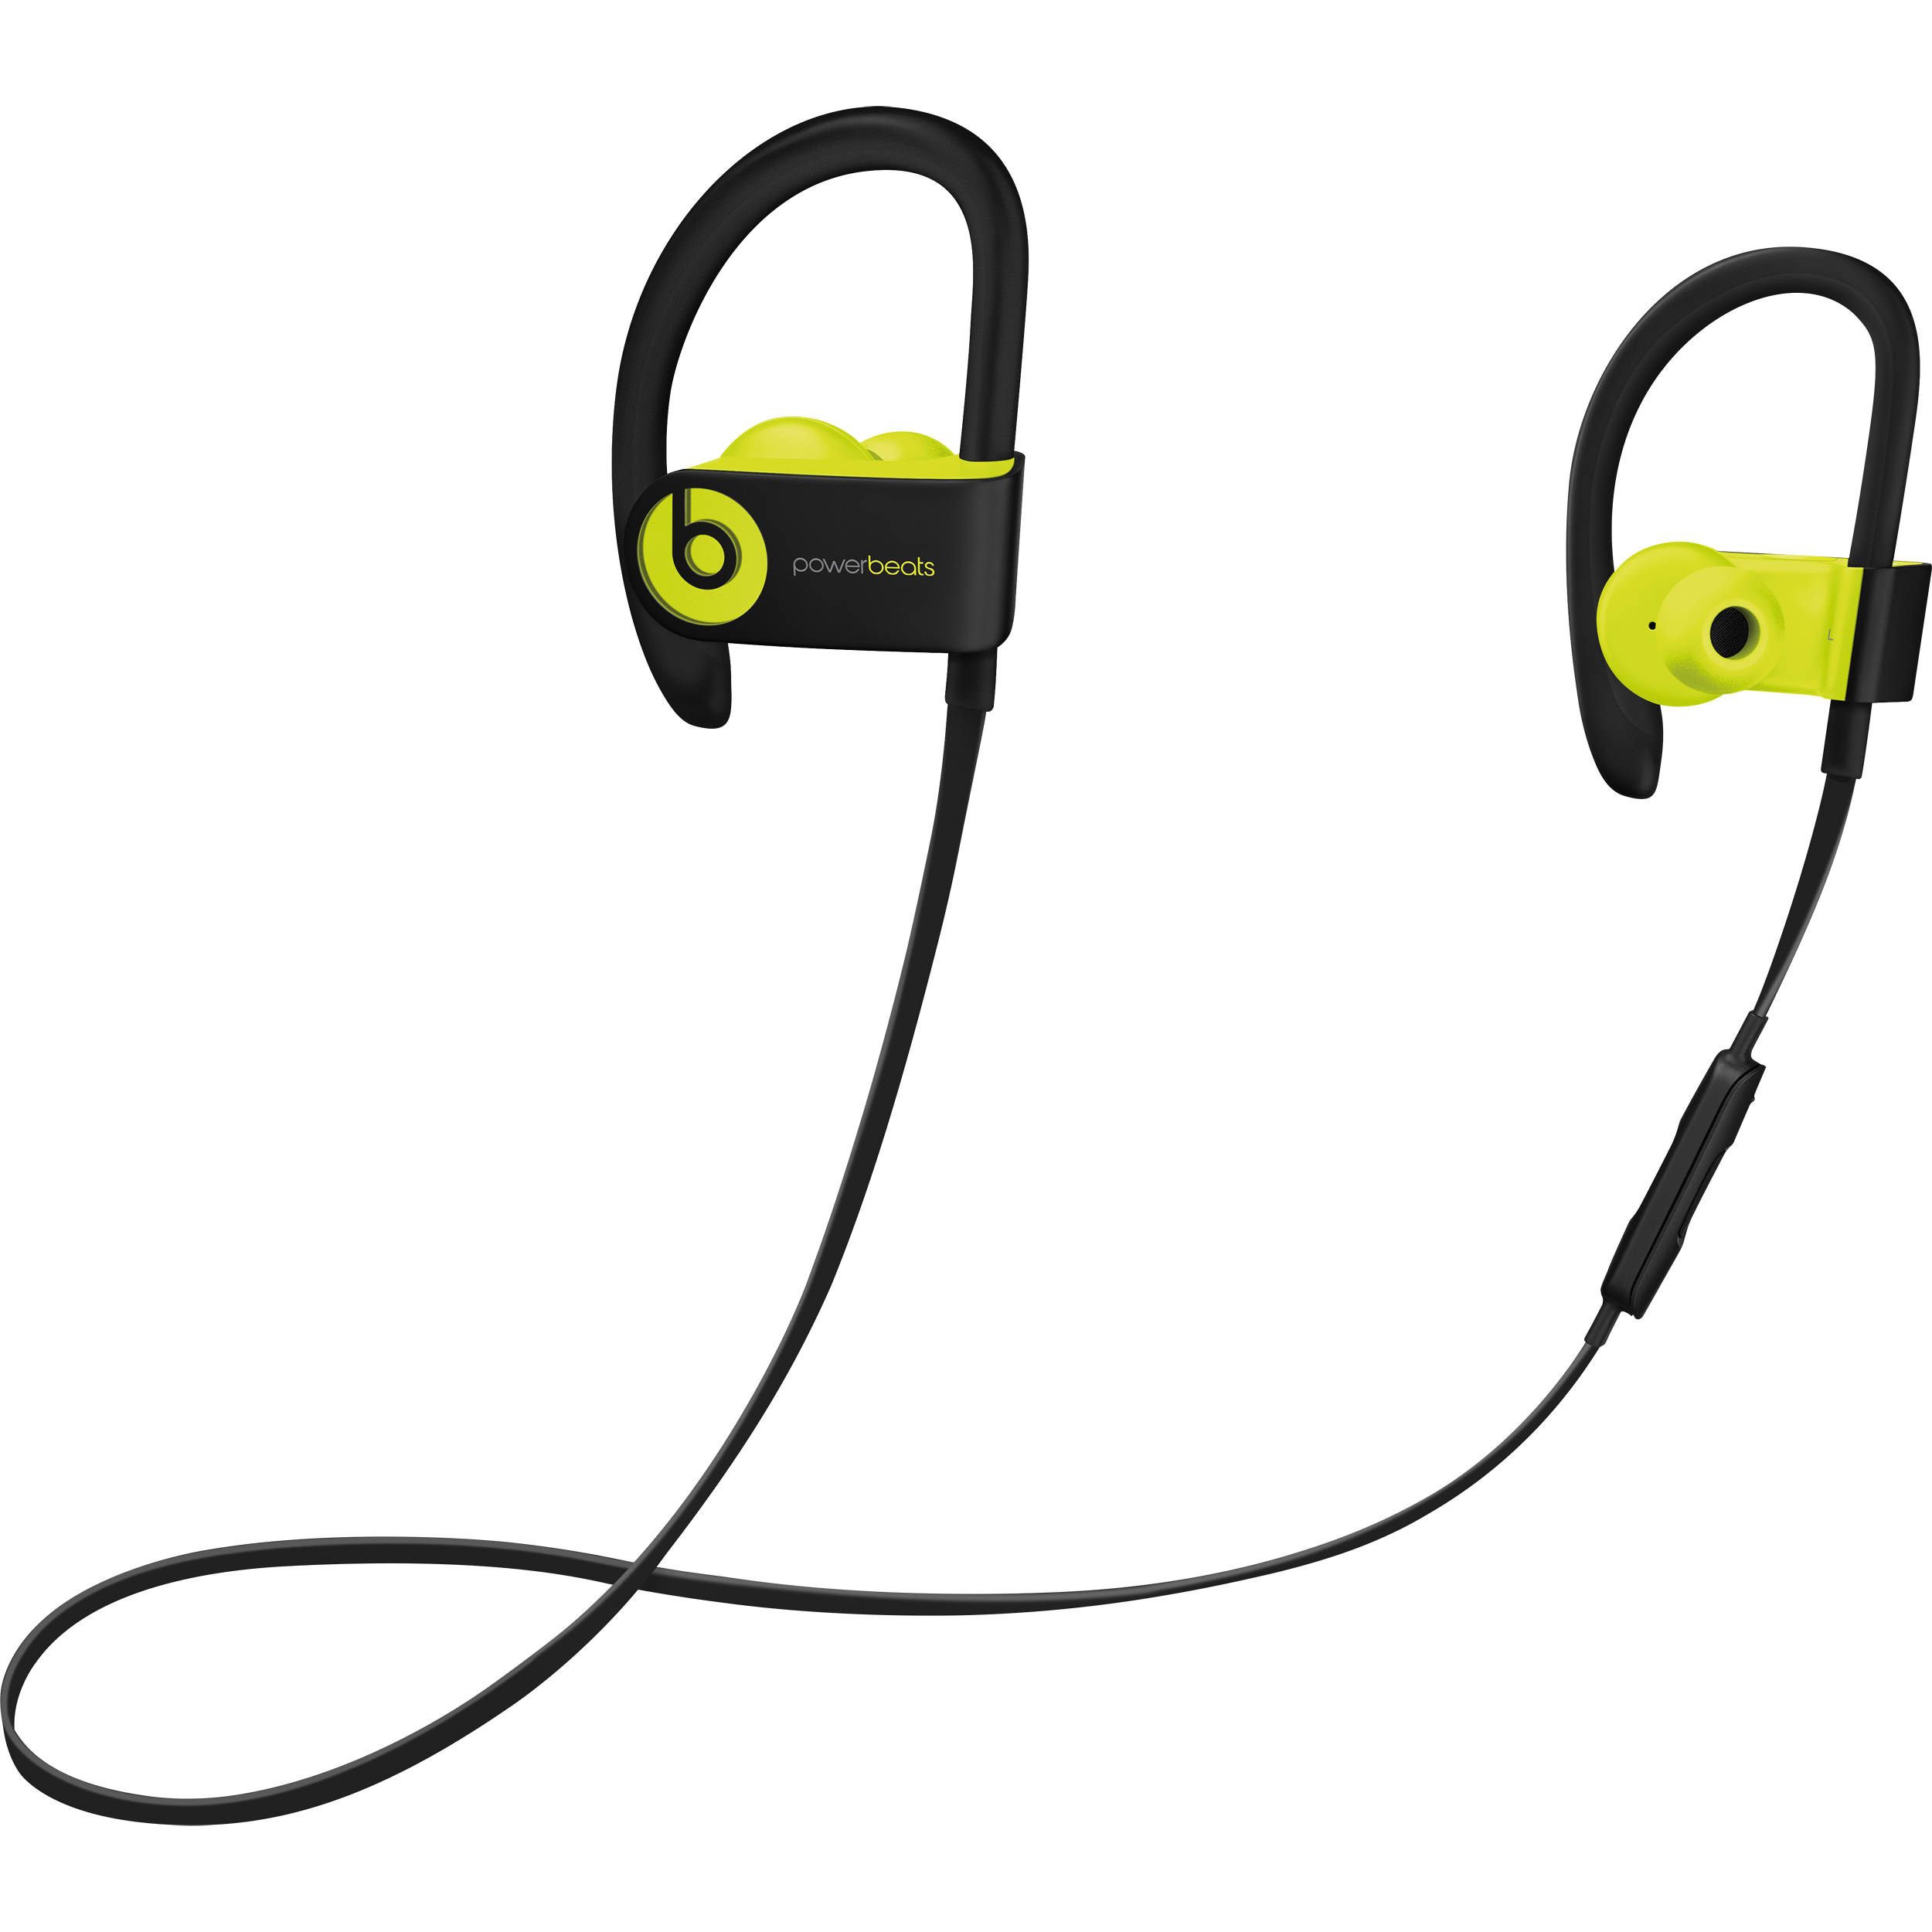 powerbeats3 wireless bluetooth headphones